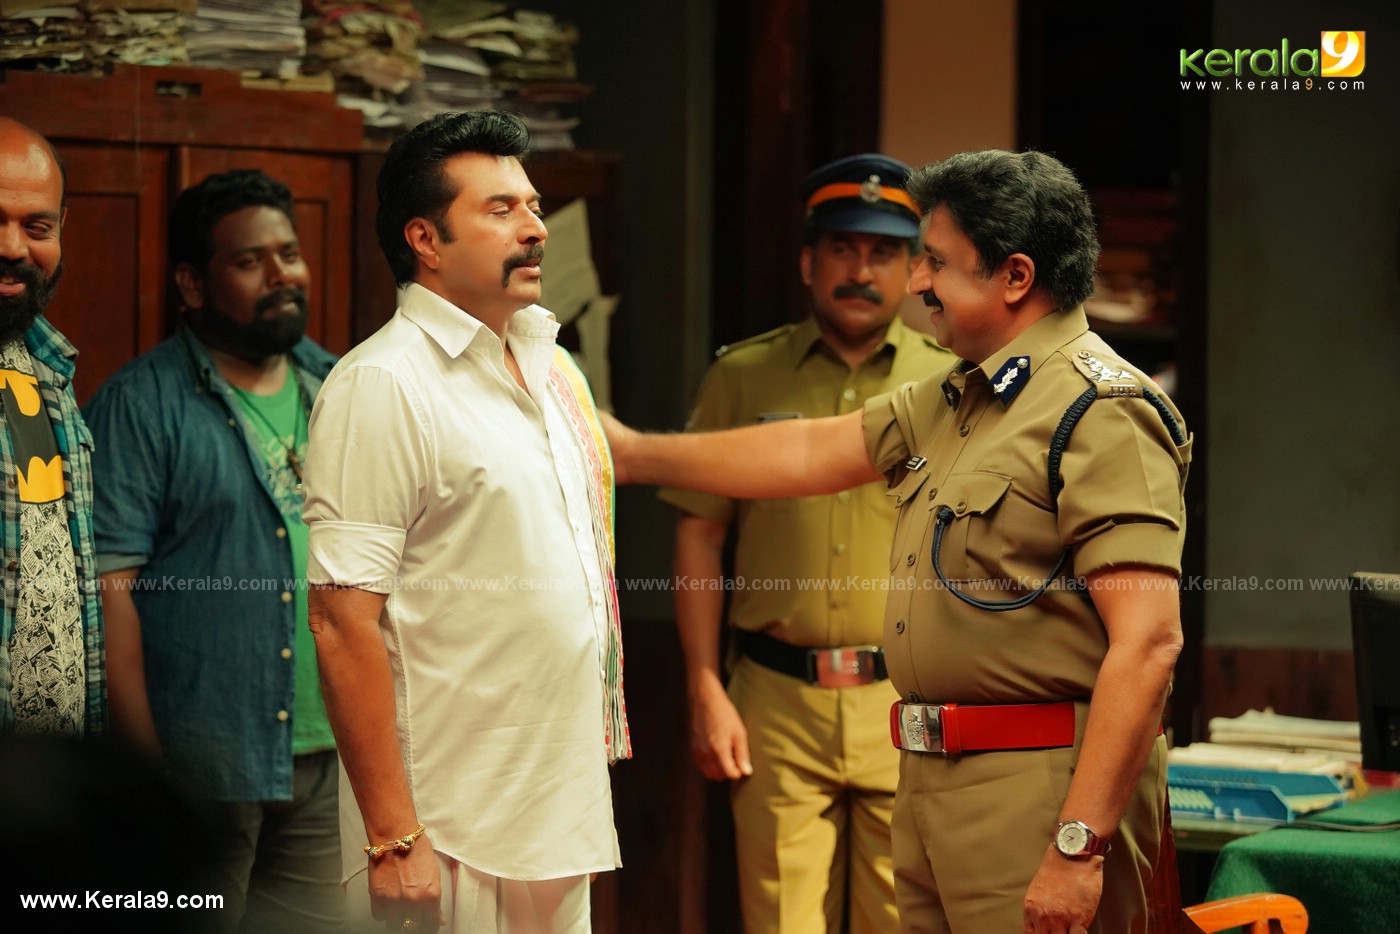 madura raja movie pictures - Kerala9.com